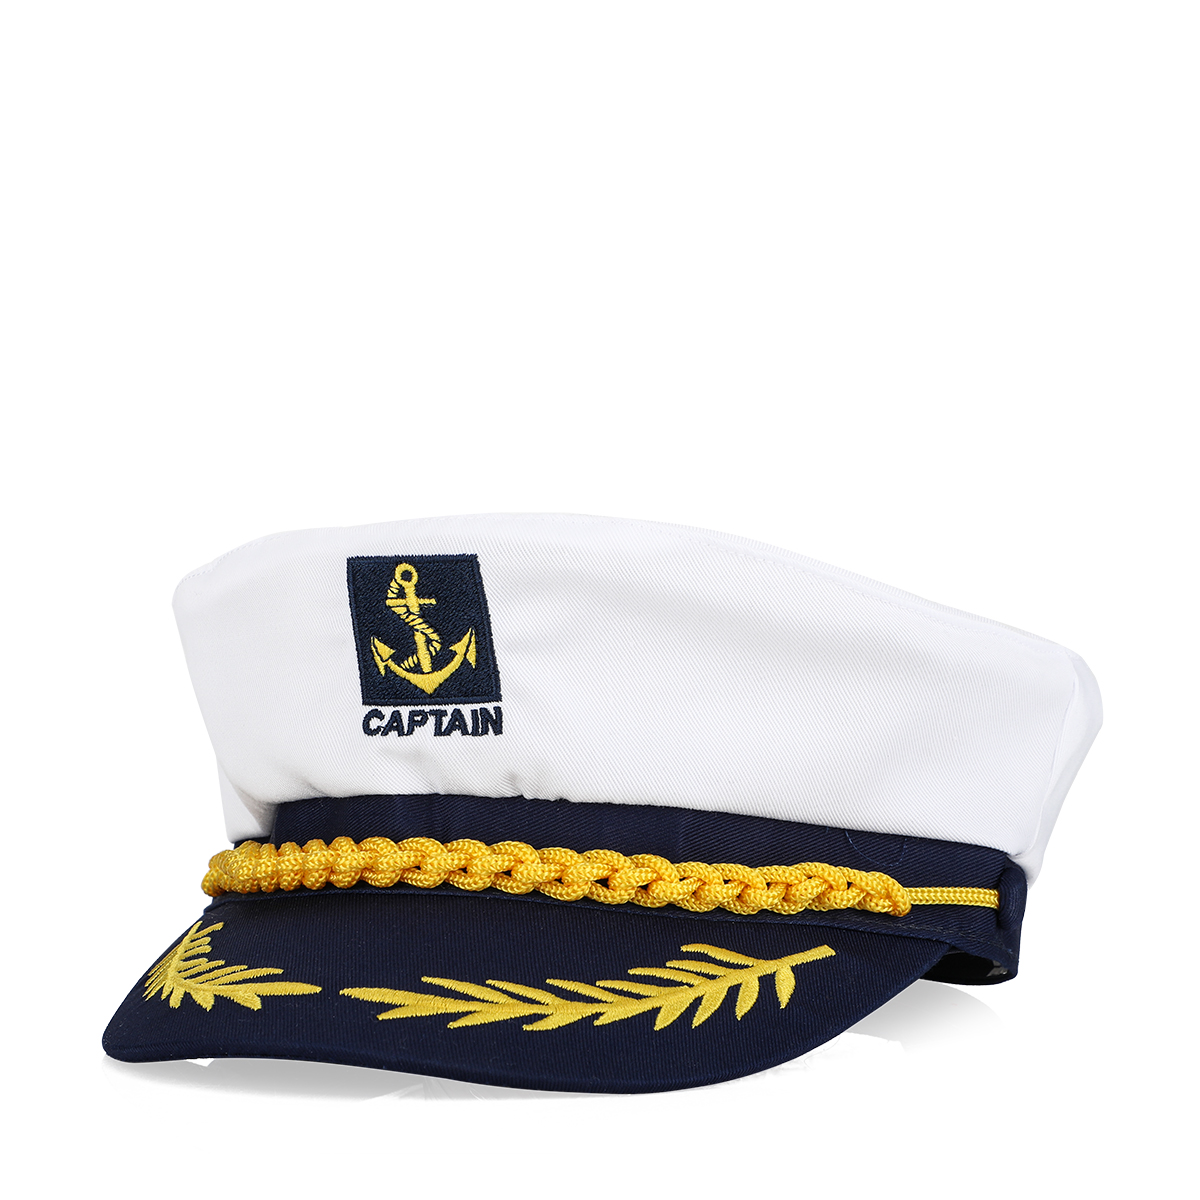 Buy Nautical Captain Sailor Hat - White Online in Oman